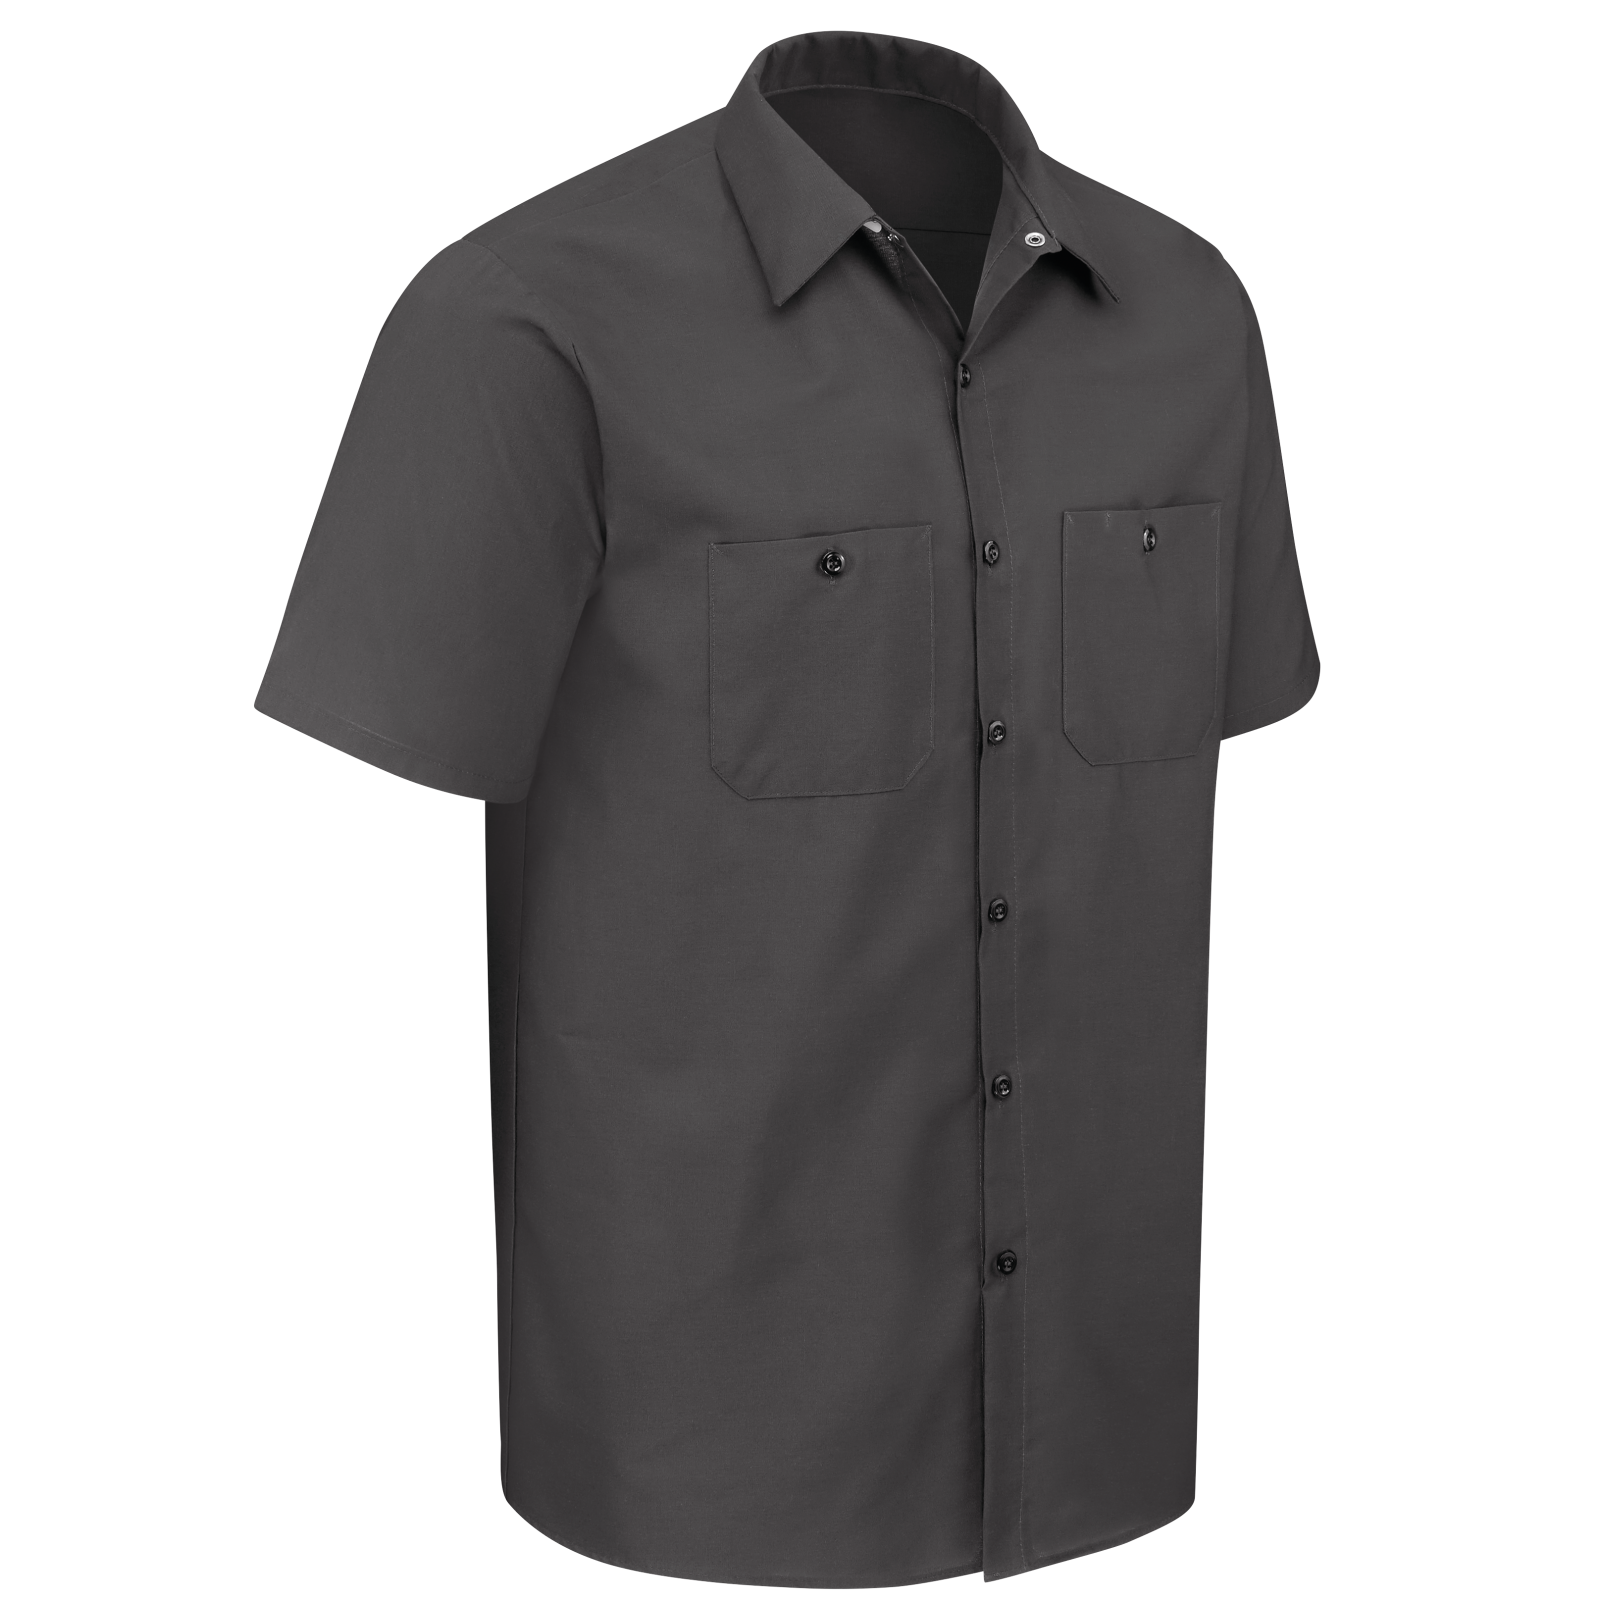 Mens Navy Short Sleeve Wrinkle Resistant Cotton WORK SHIRT Red Kap Uniform SC40 